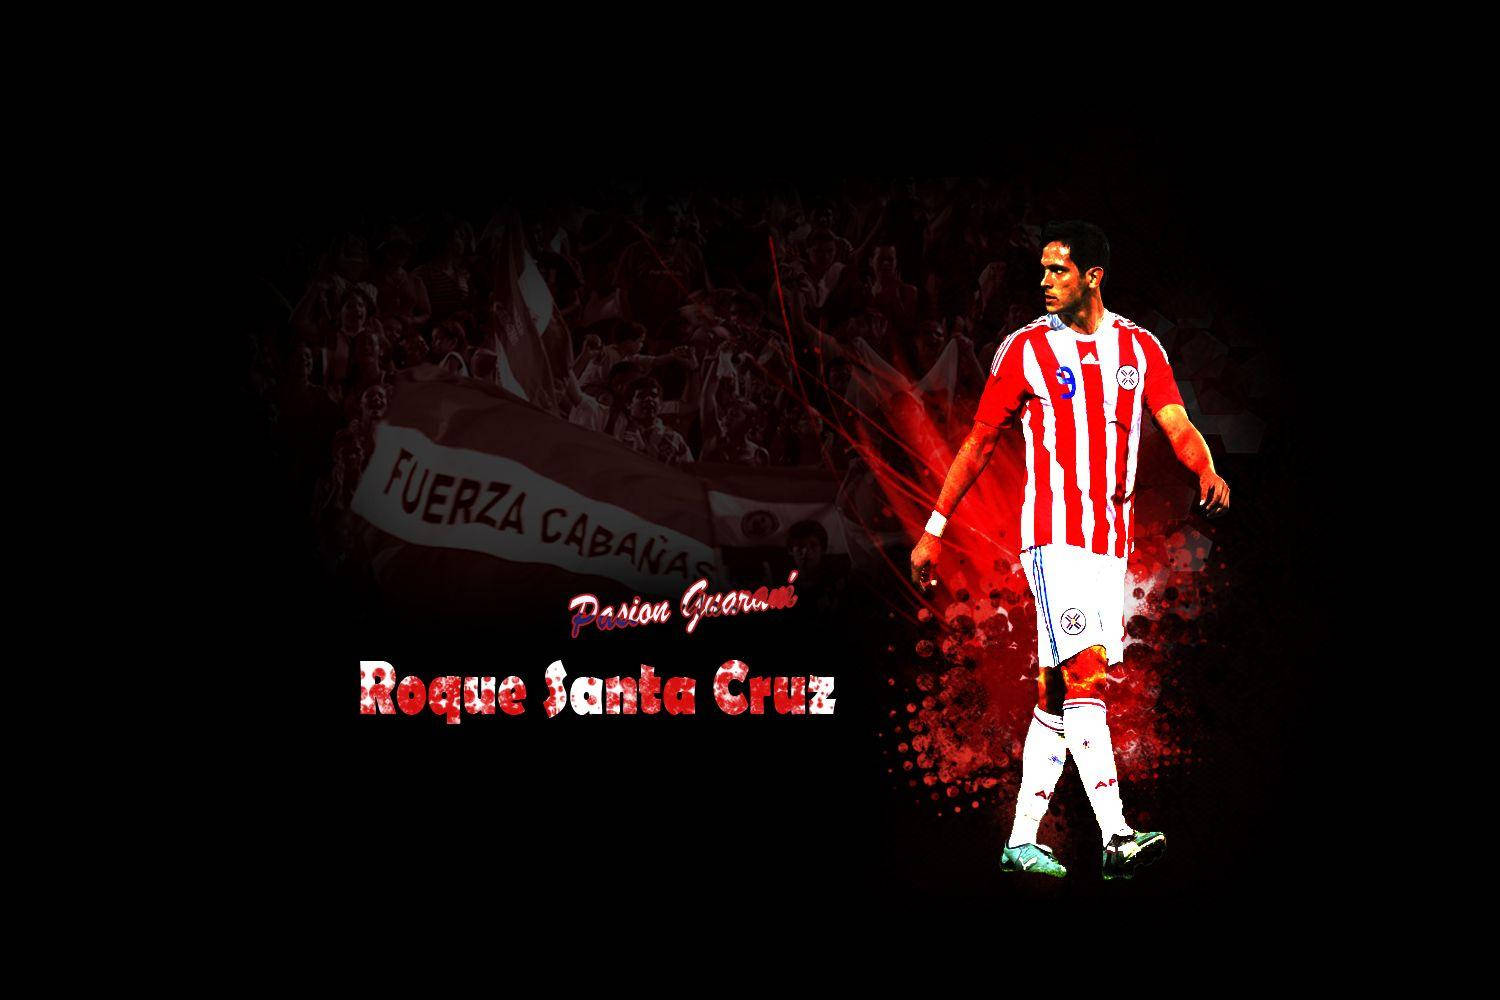 Paraguay Soccer Player Roque Wallpaper